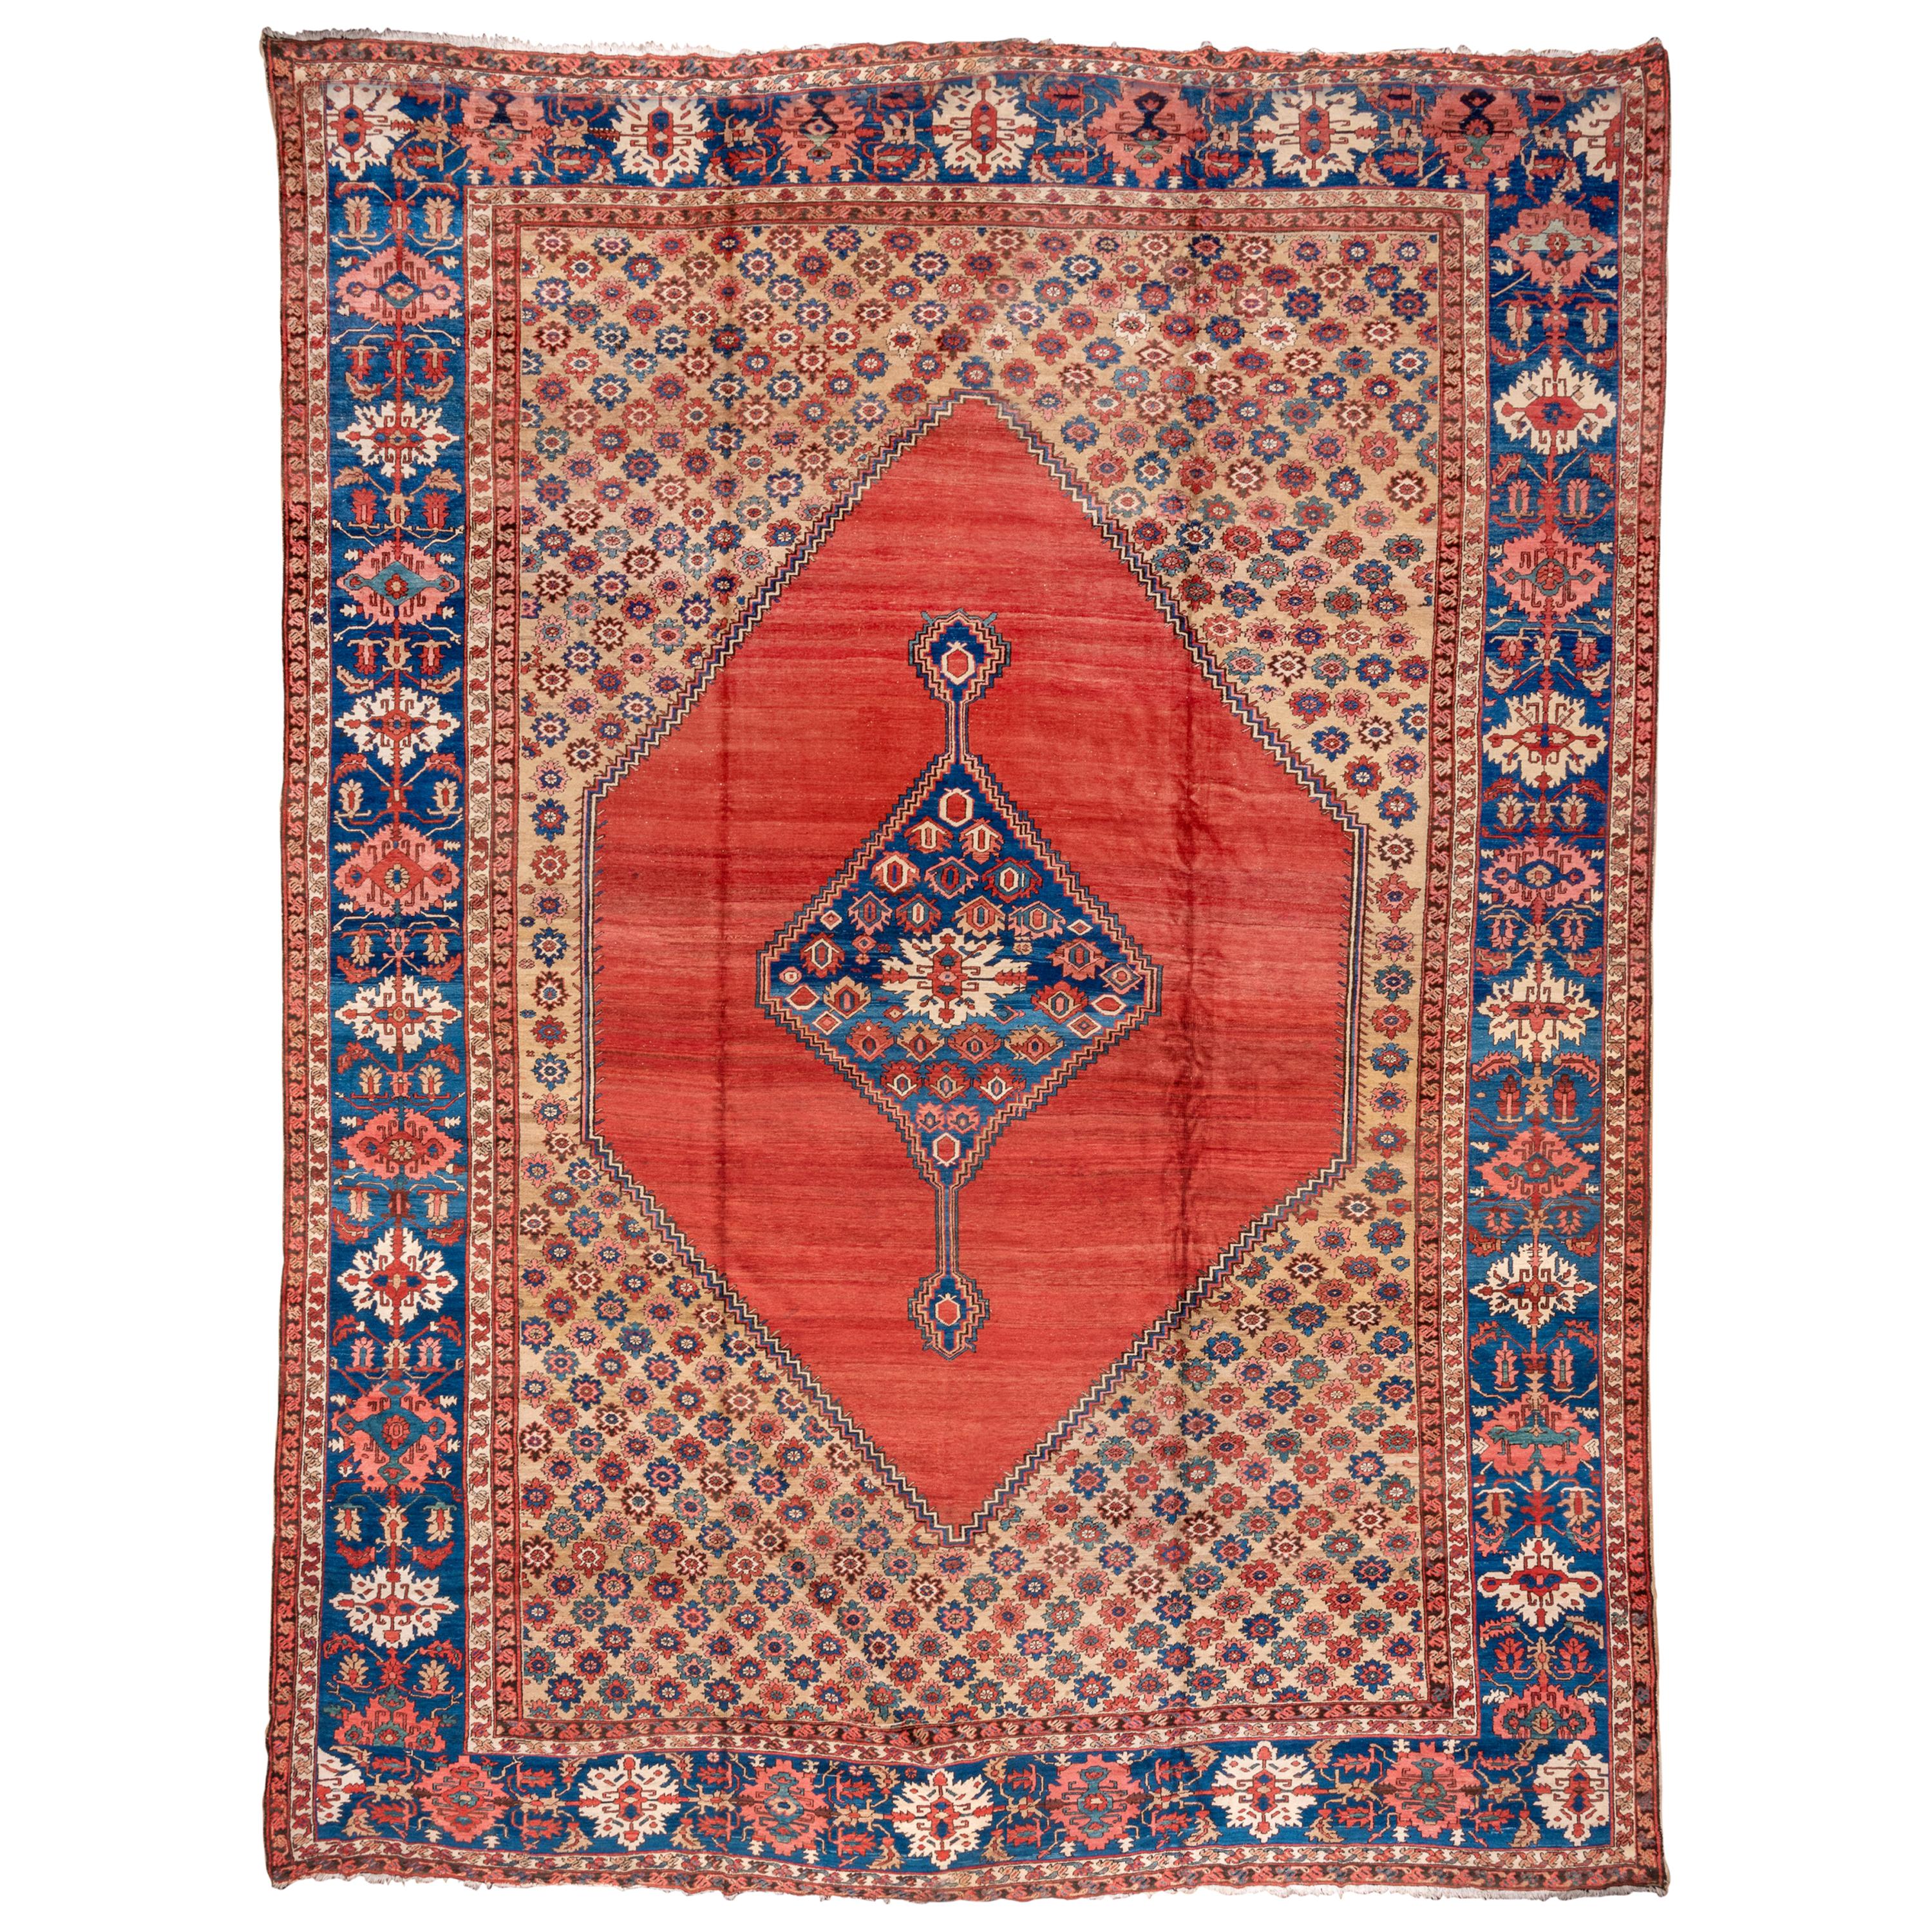 Rare Fine Antique Persian Serapi Mansion Carpet, Bright Colors, Blue Border